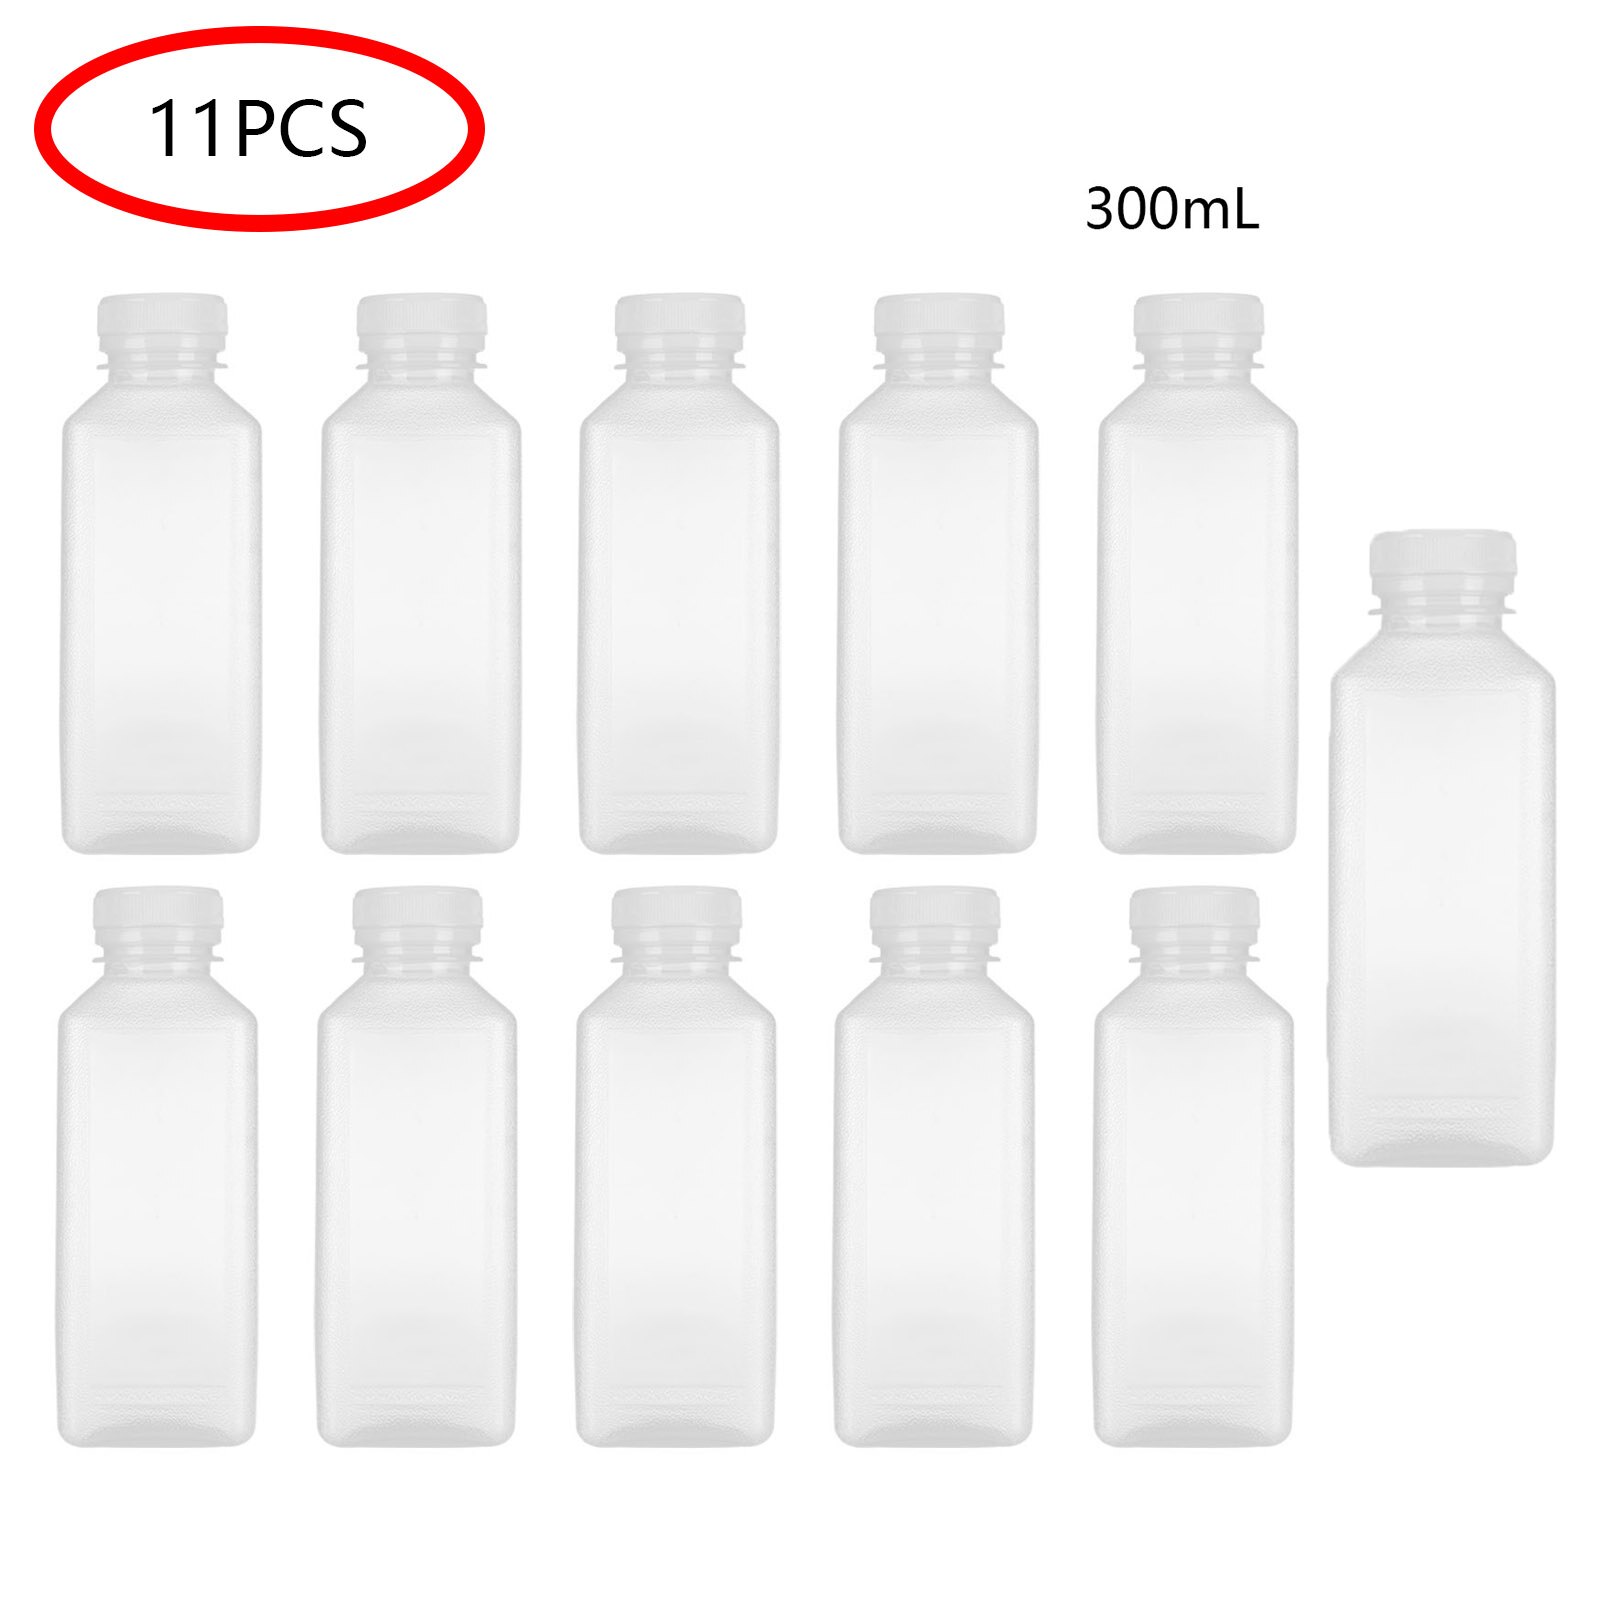 300/350/400ml Transparent PET Water Bottle Plastic Empty Soft Drink Containers Beverage Bottles with Lids: 11 Pcs 300ml